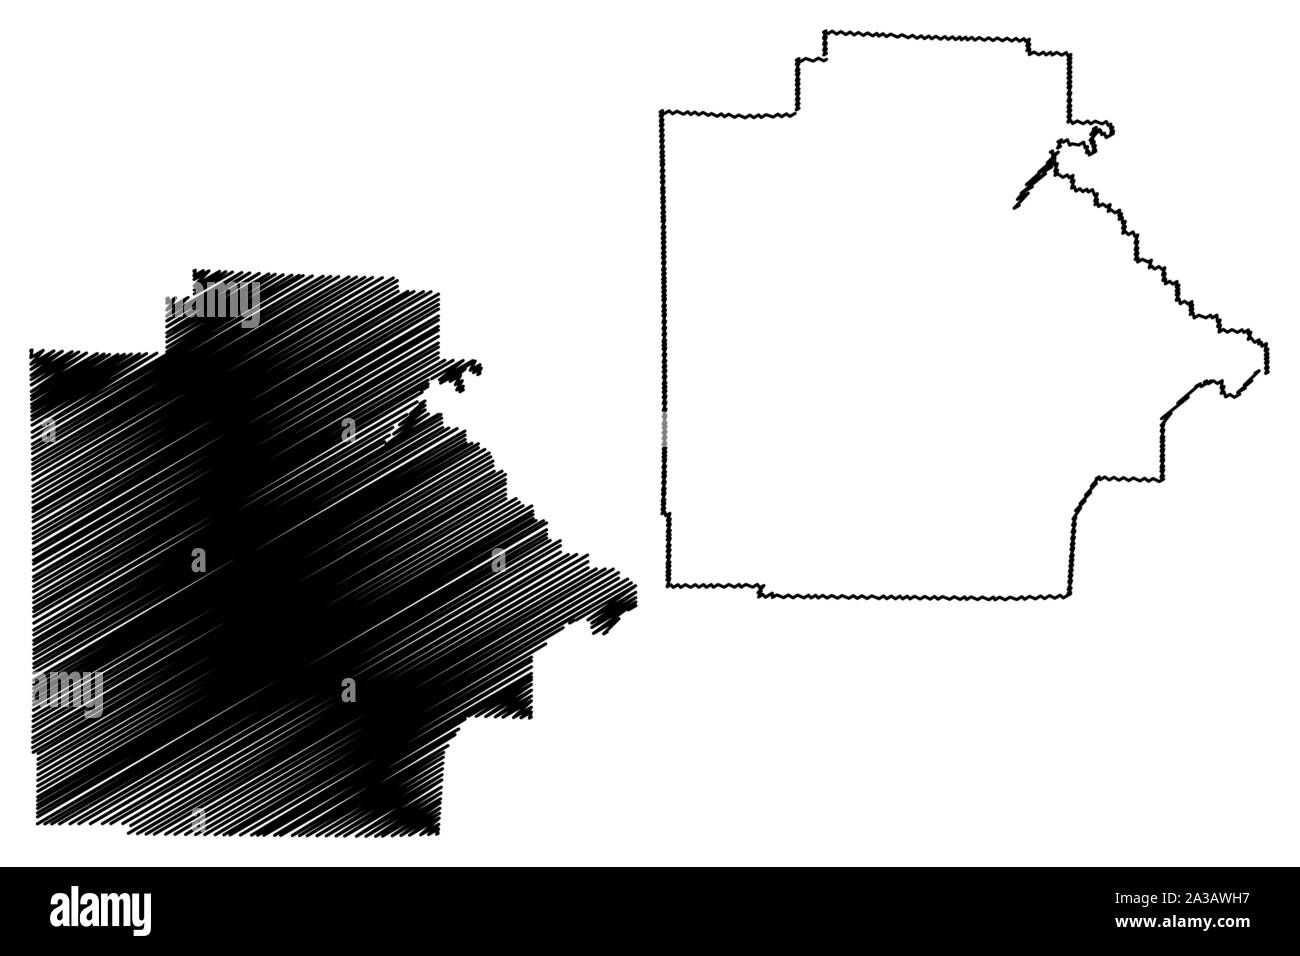 Tuscaloosa County, Alabama (Grafschaften in Alabama, Vereinigte Staaten von Amerika, USA, USA, USA) Karte Vektor-illustration, kritzeln Skizze Tuscaloosa map Stock Vektor